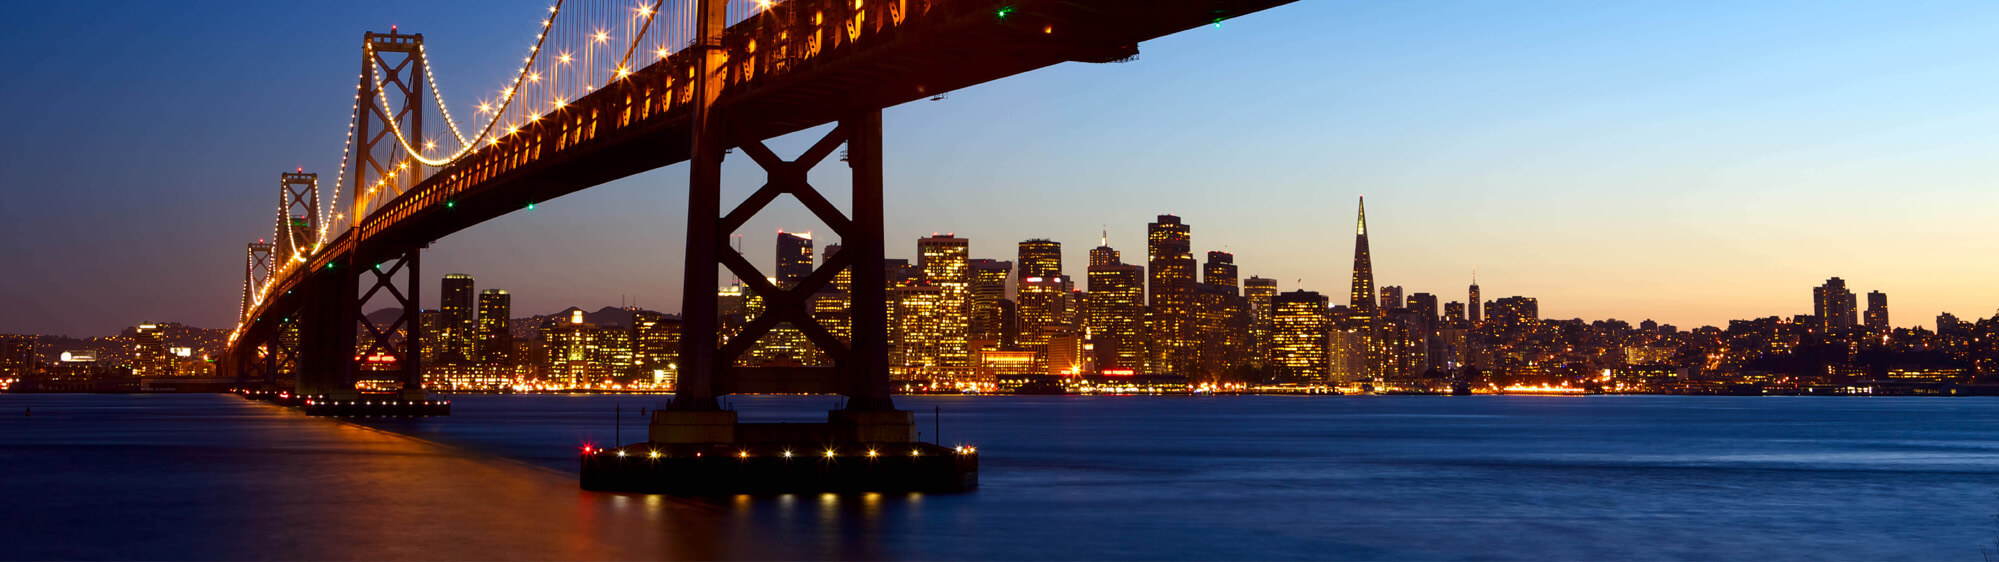 SAP.iO Foundry San Francisco B2B travel technology accelerator Launches